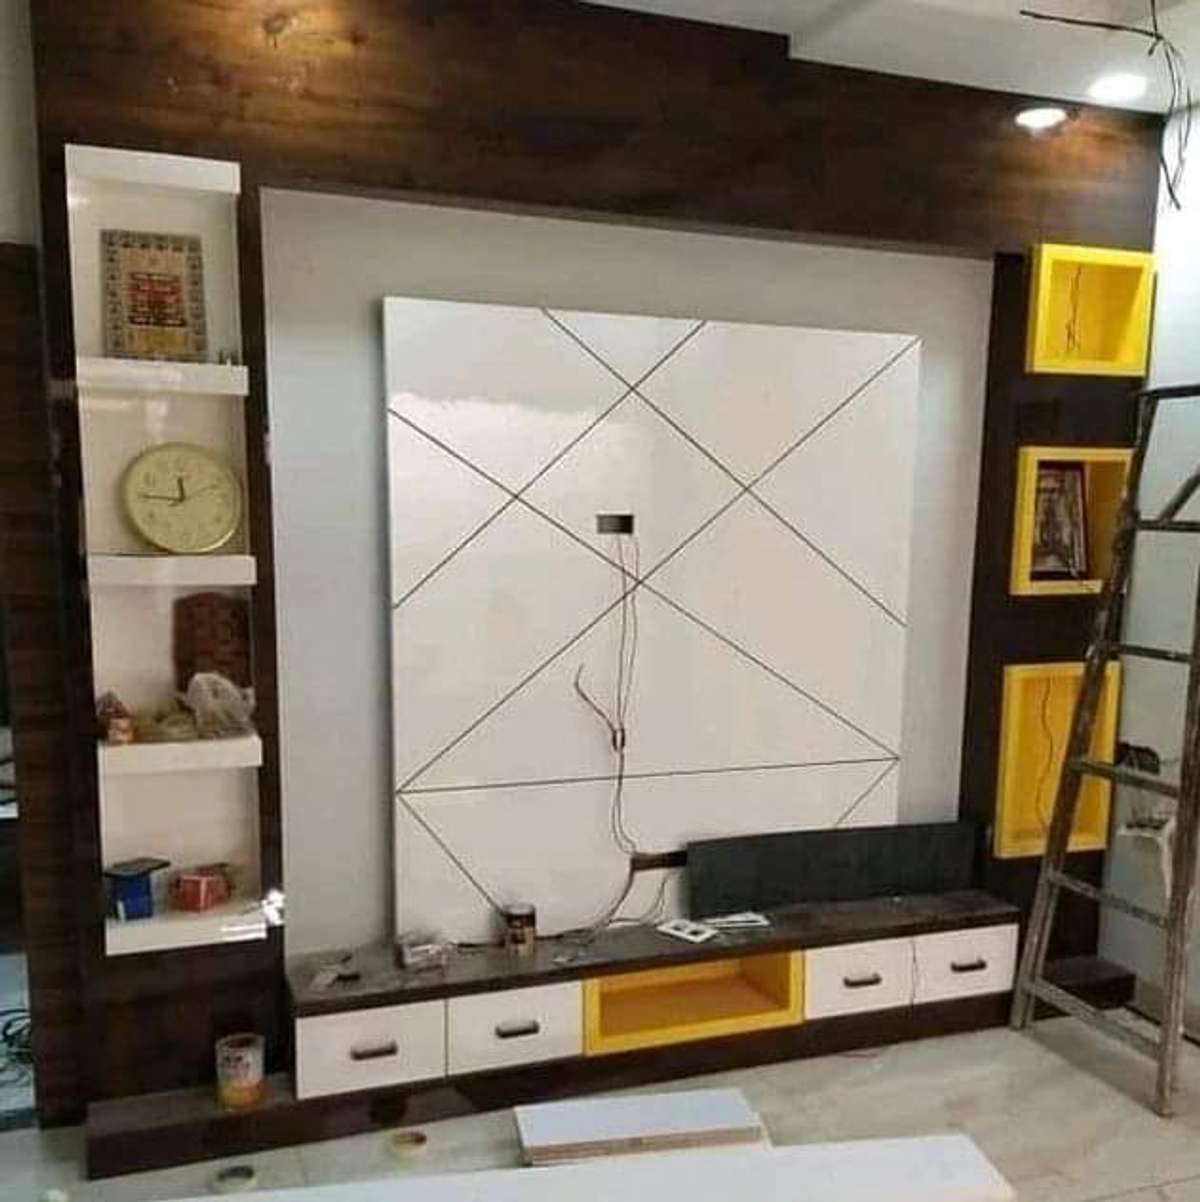 Electricals, Furniture, Home Decor, Wall Designs by Carpenter ЁЯЩП рдлреЙрд▓реЛ рдХрд░реЛ рджрд┐рд▓реНрд▓реА рдХрд╛рд░рдкреЗрдВрдЯрд░ рдХреЛ, Delhi | Kolo